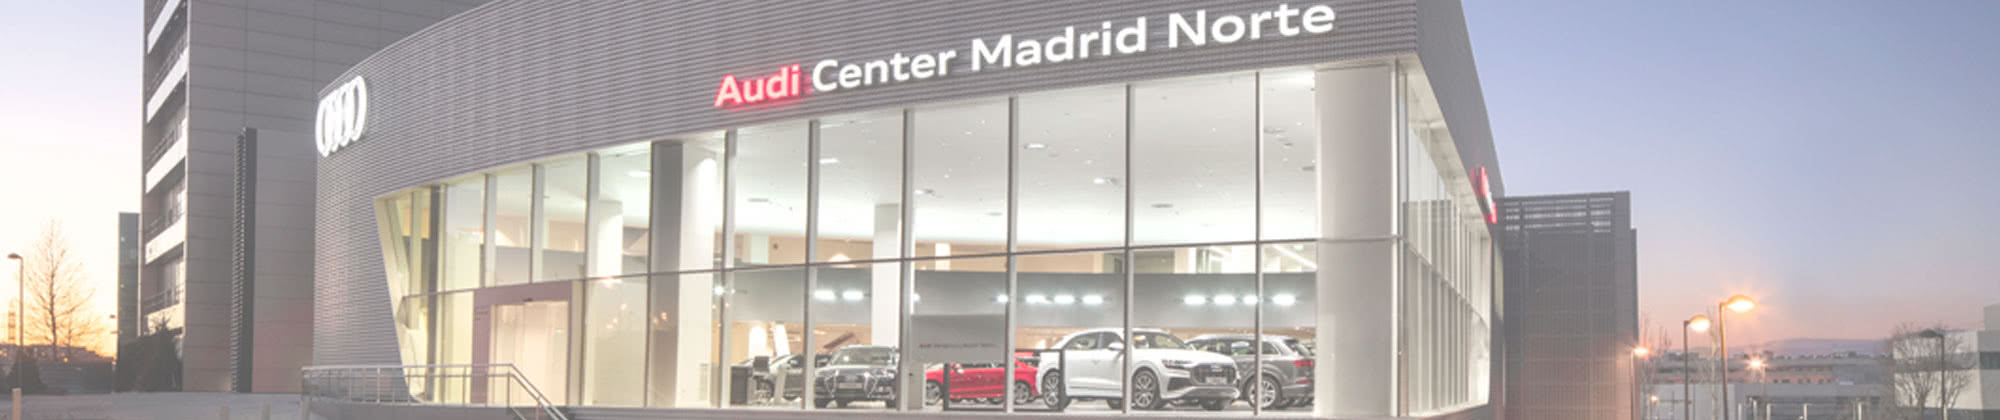 Home Audi Retail Madrid